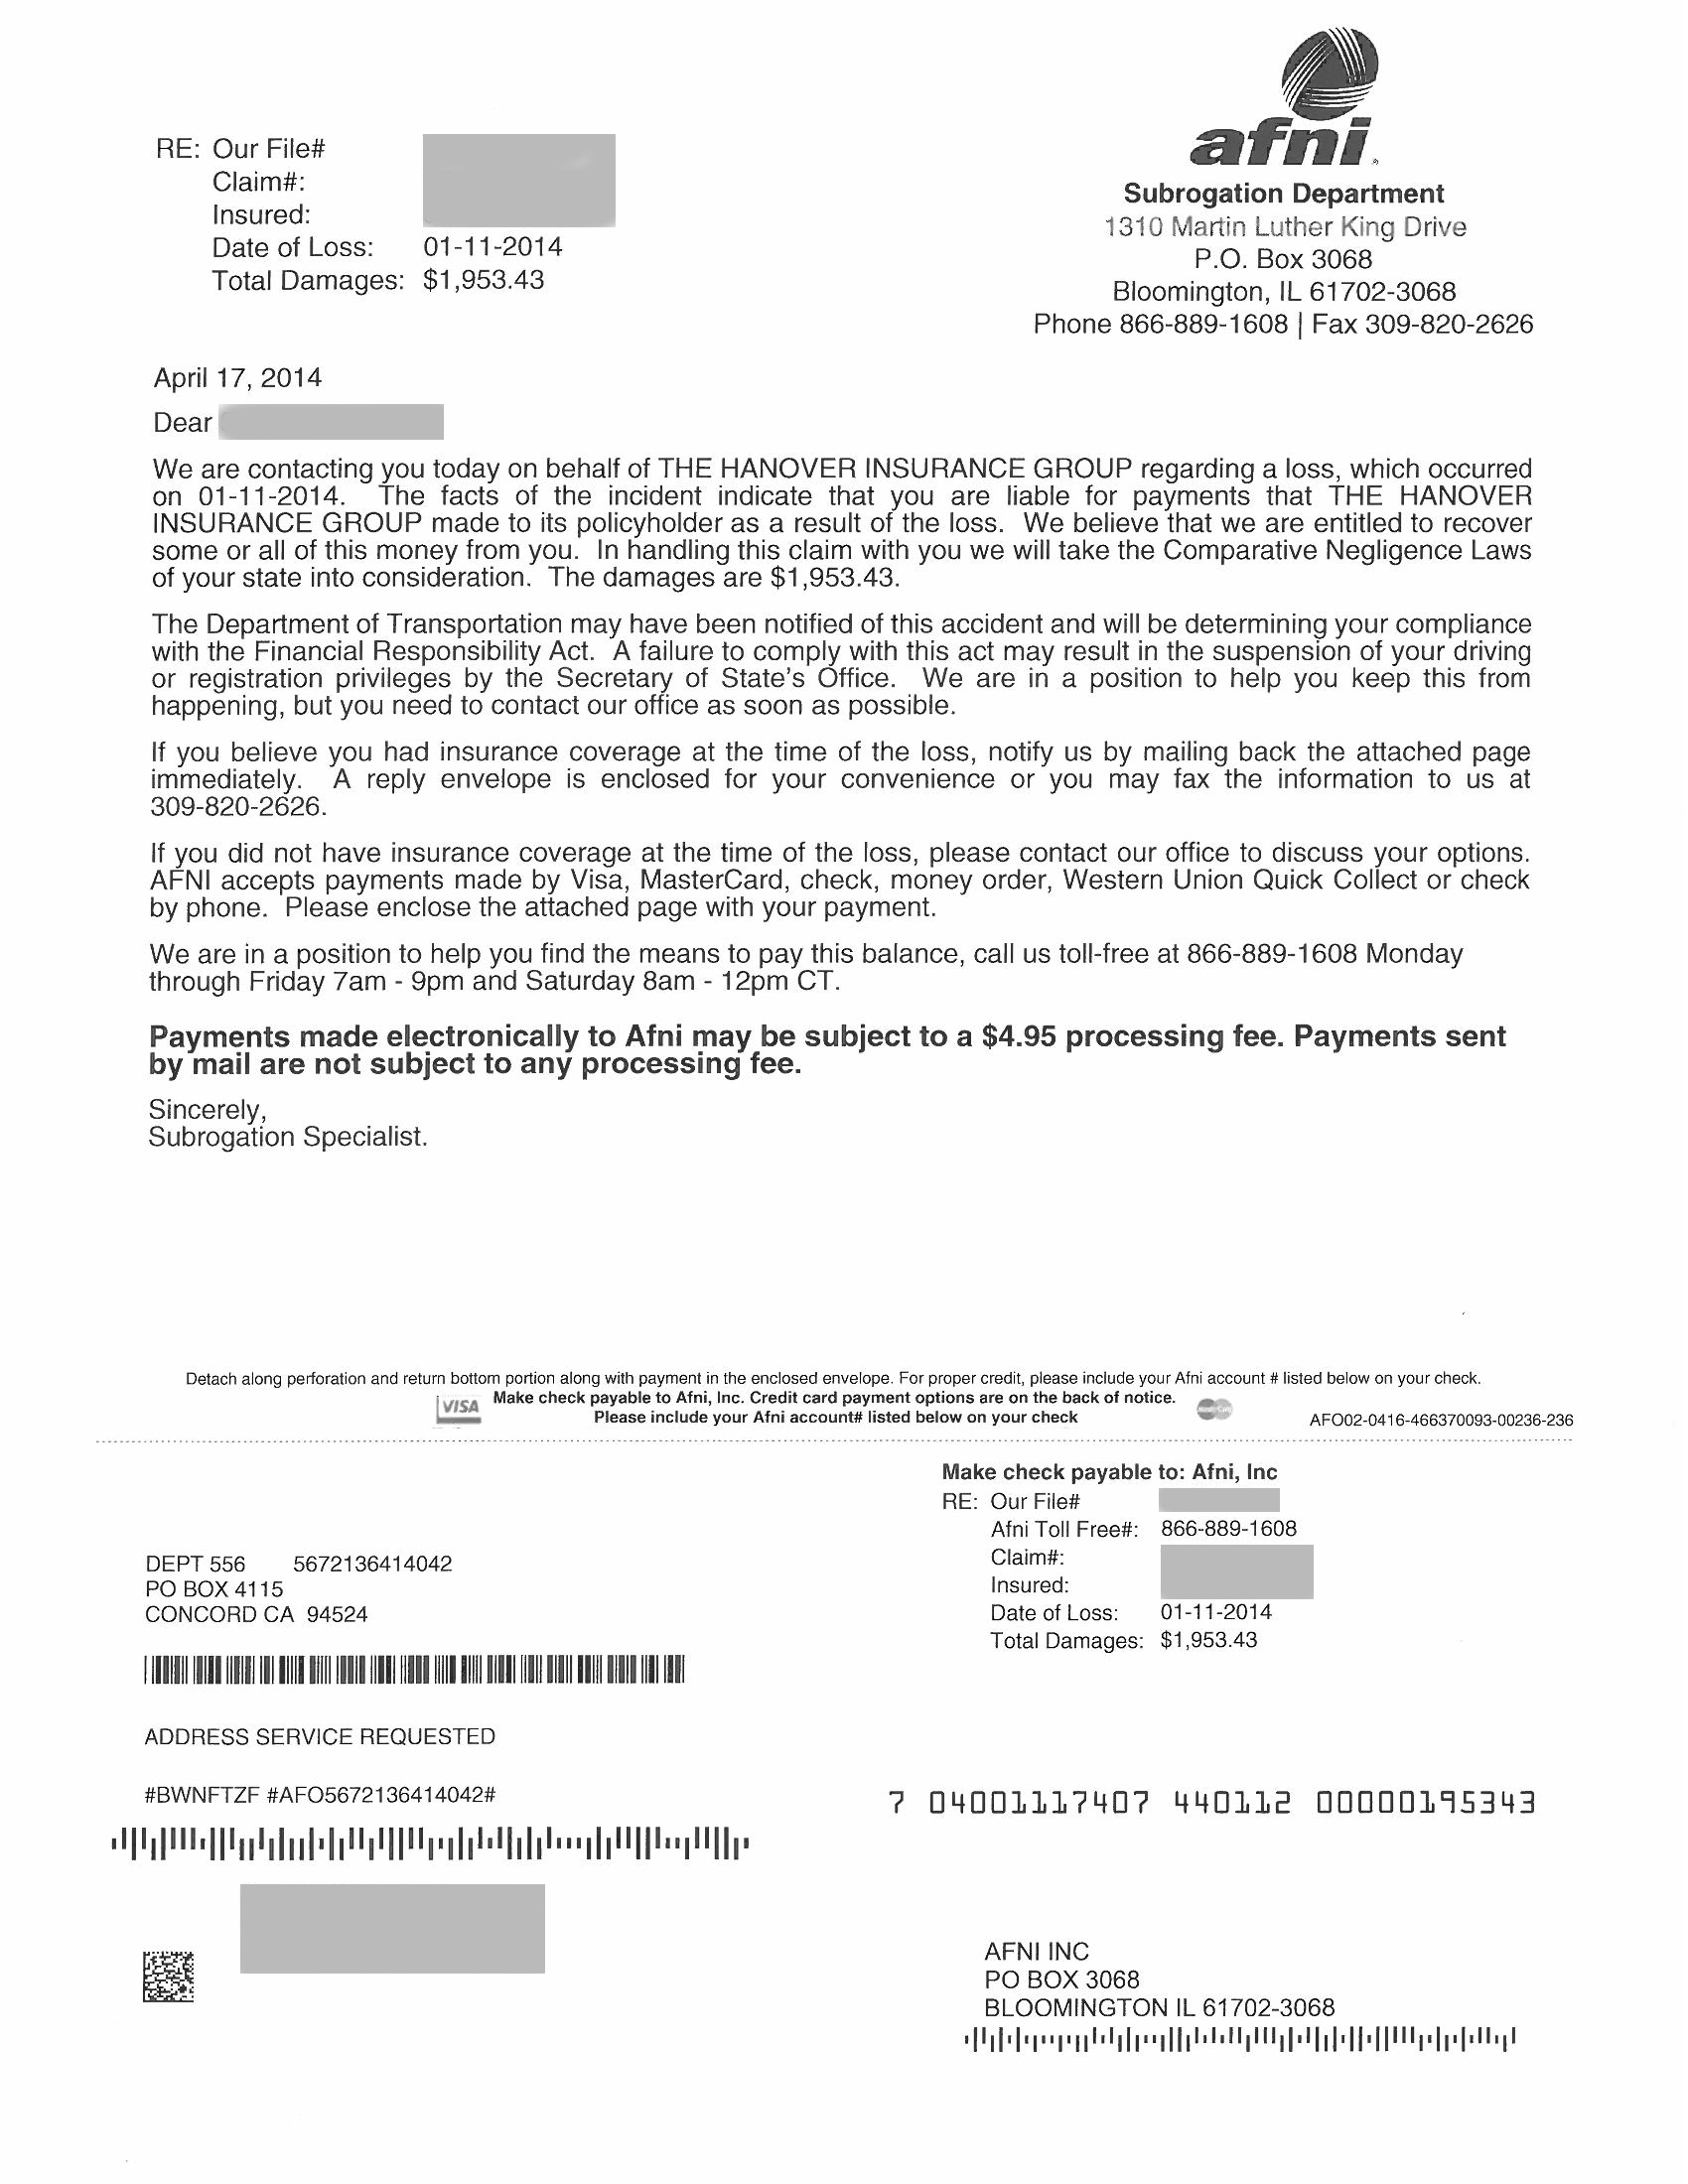 AFNI, Inc - Hanover Insurance Group SCAM letter